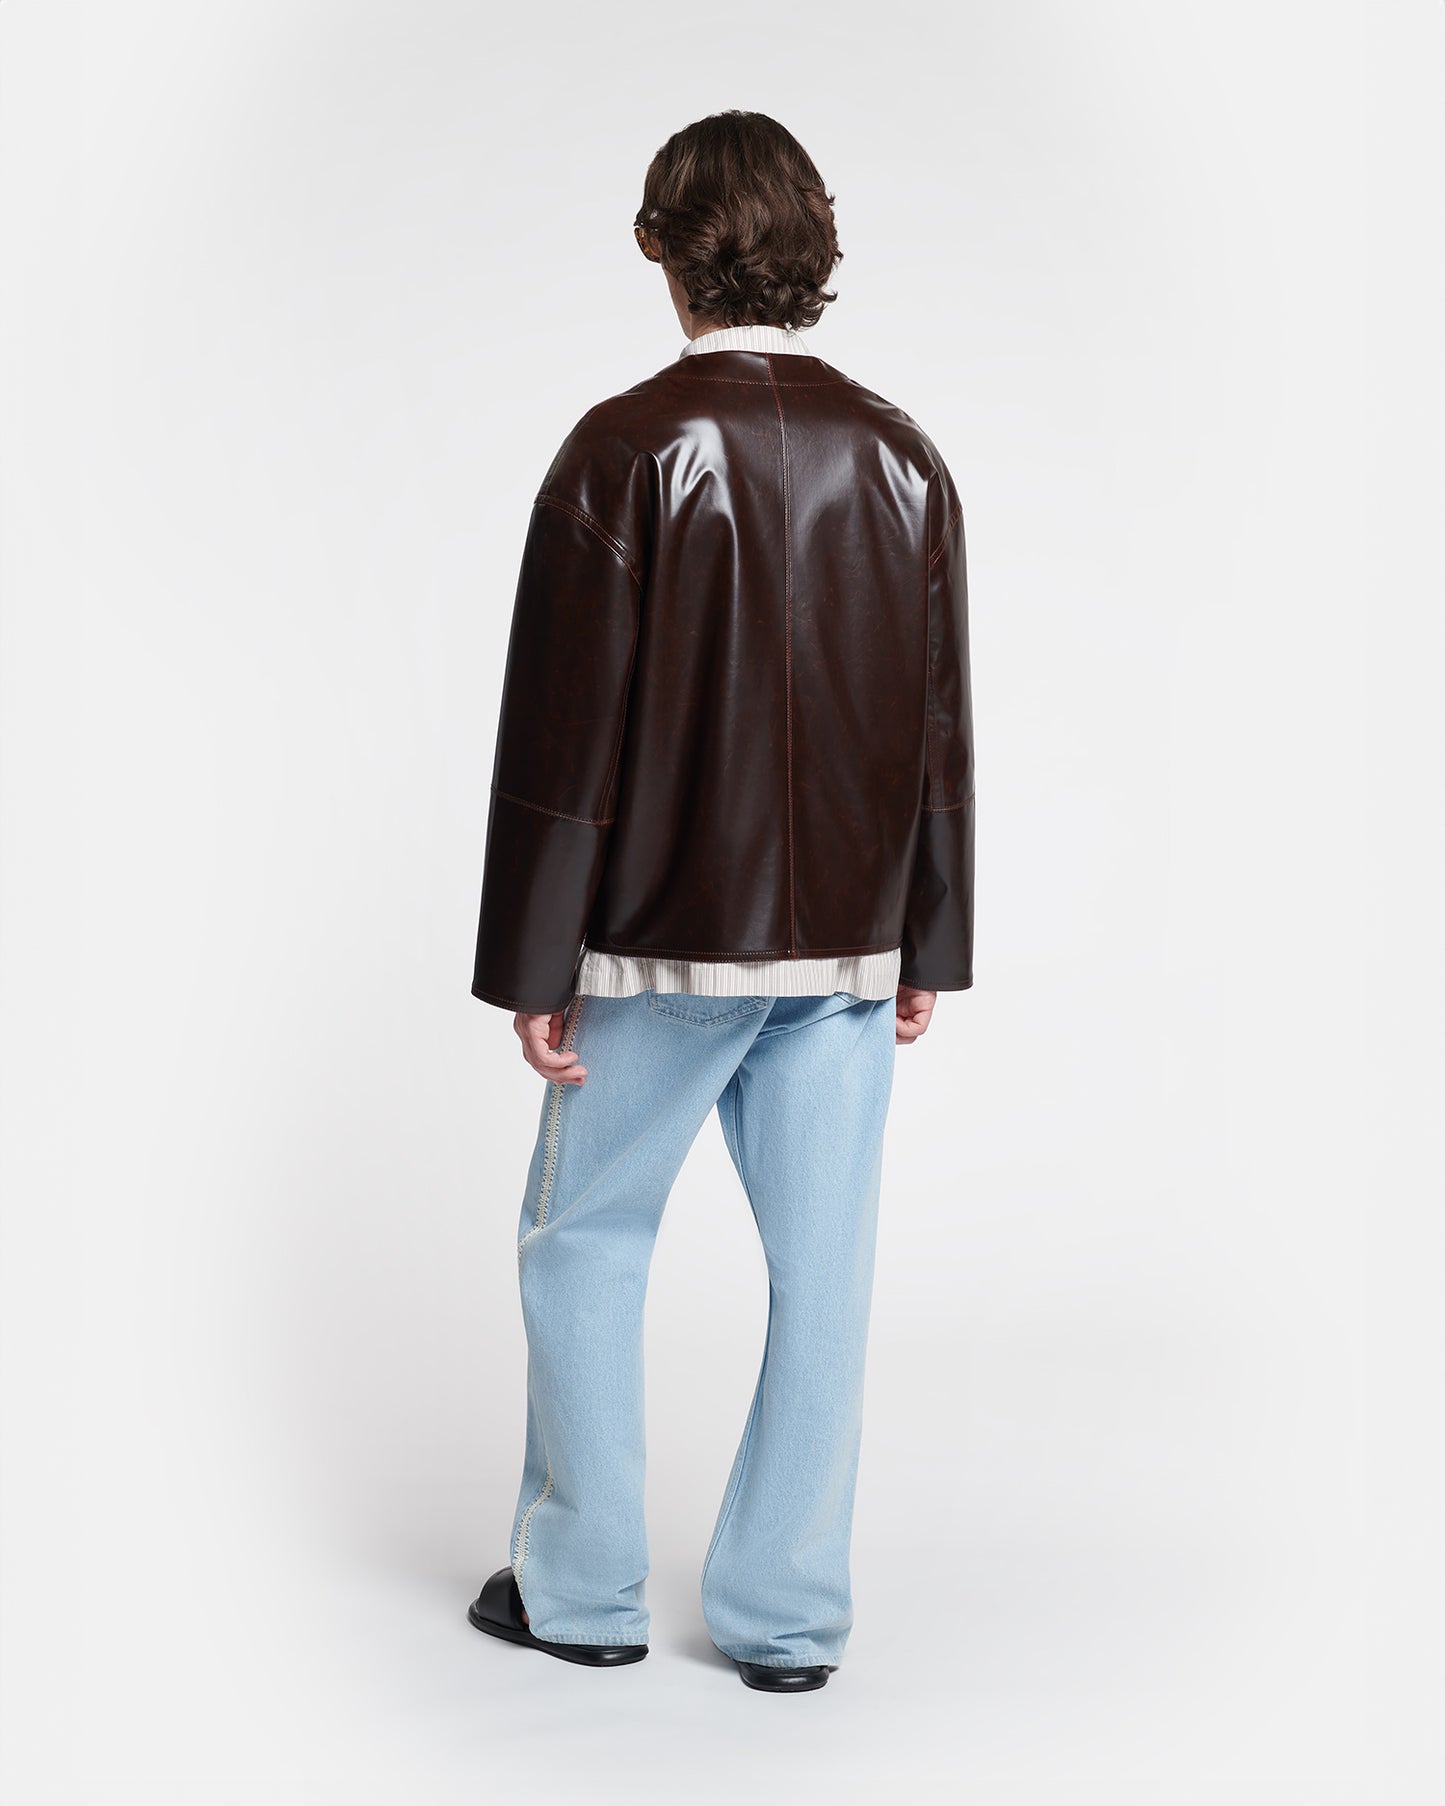 Edee - Alt Vintage Leather Jacket - Dark Brown